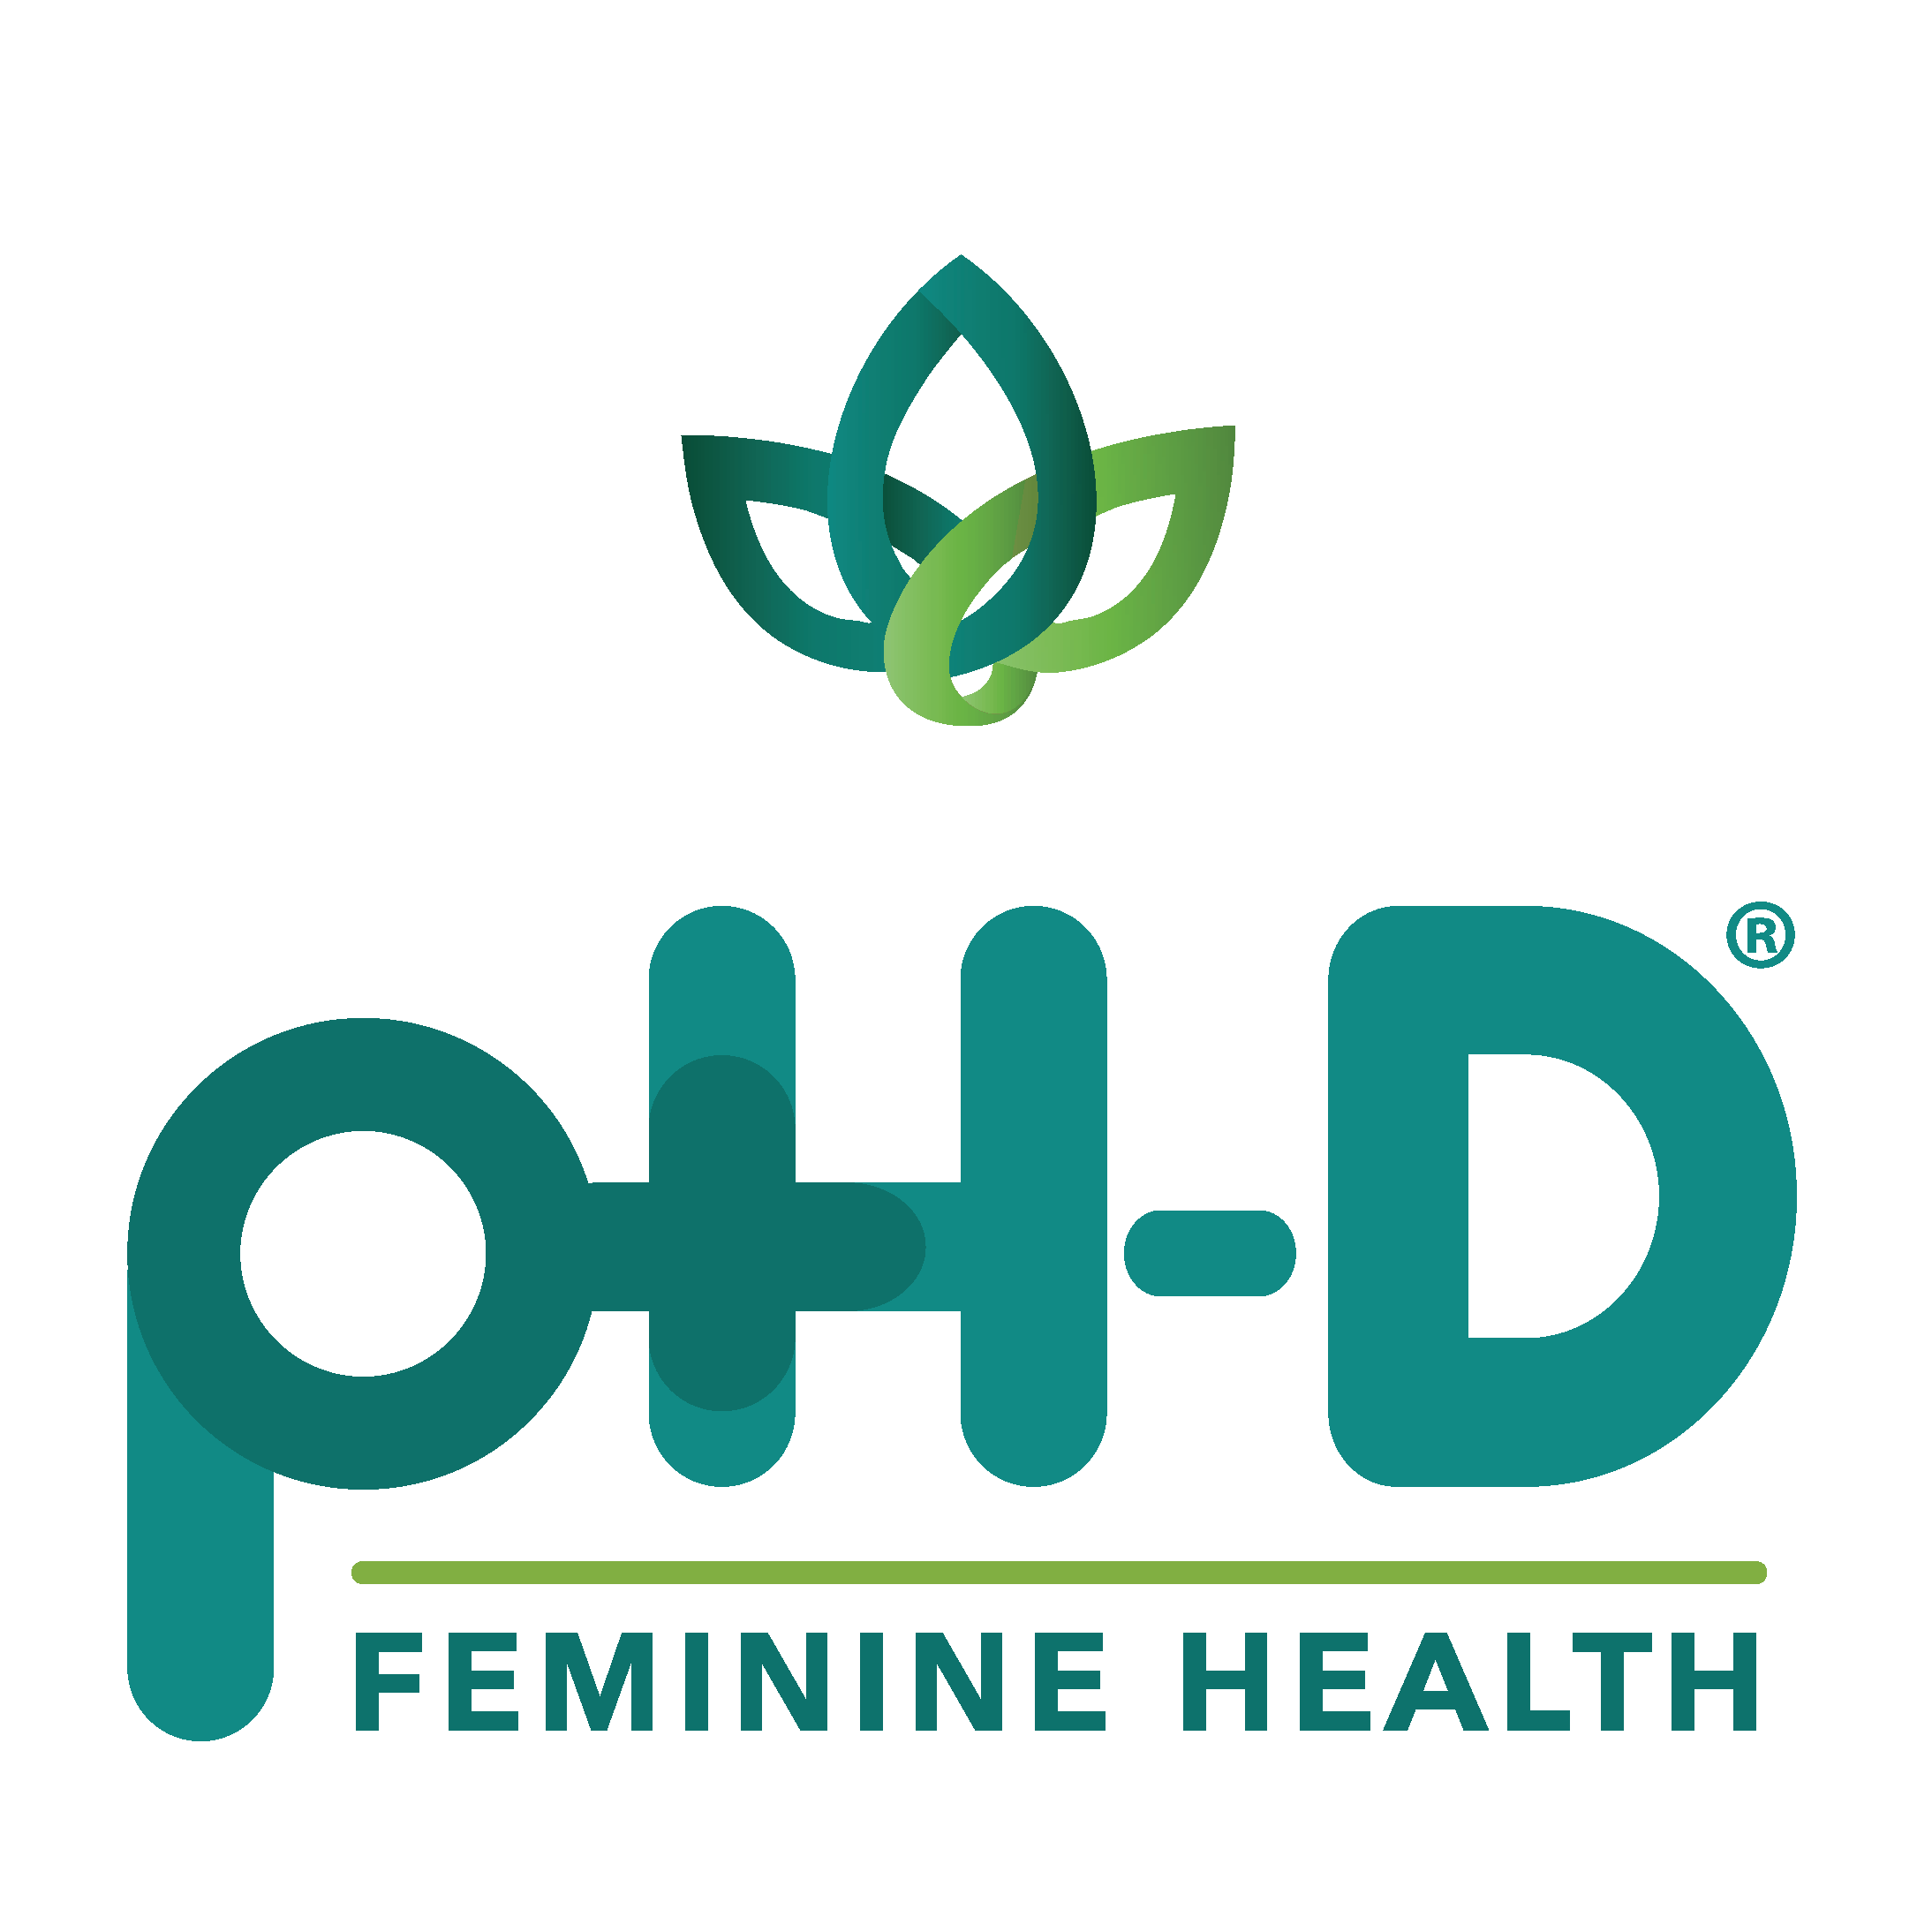 what is phd feminine health